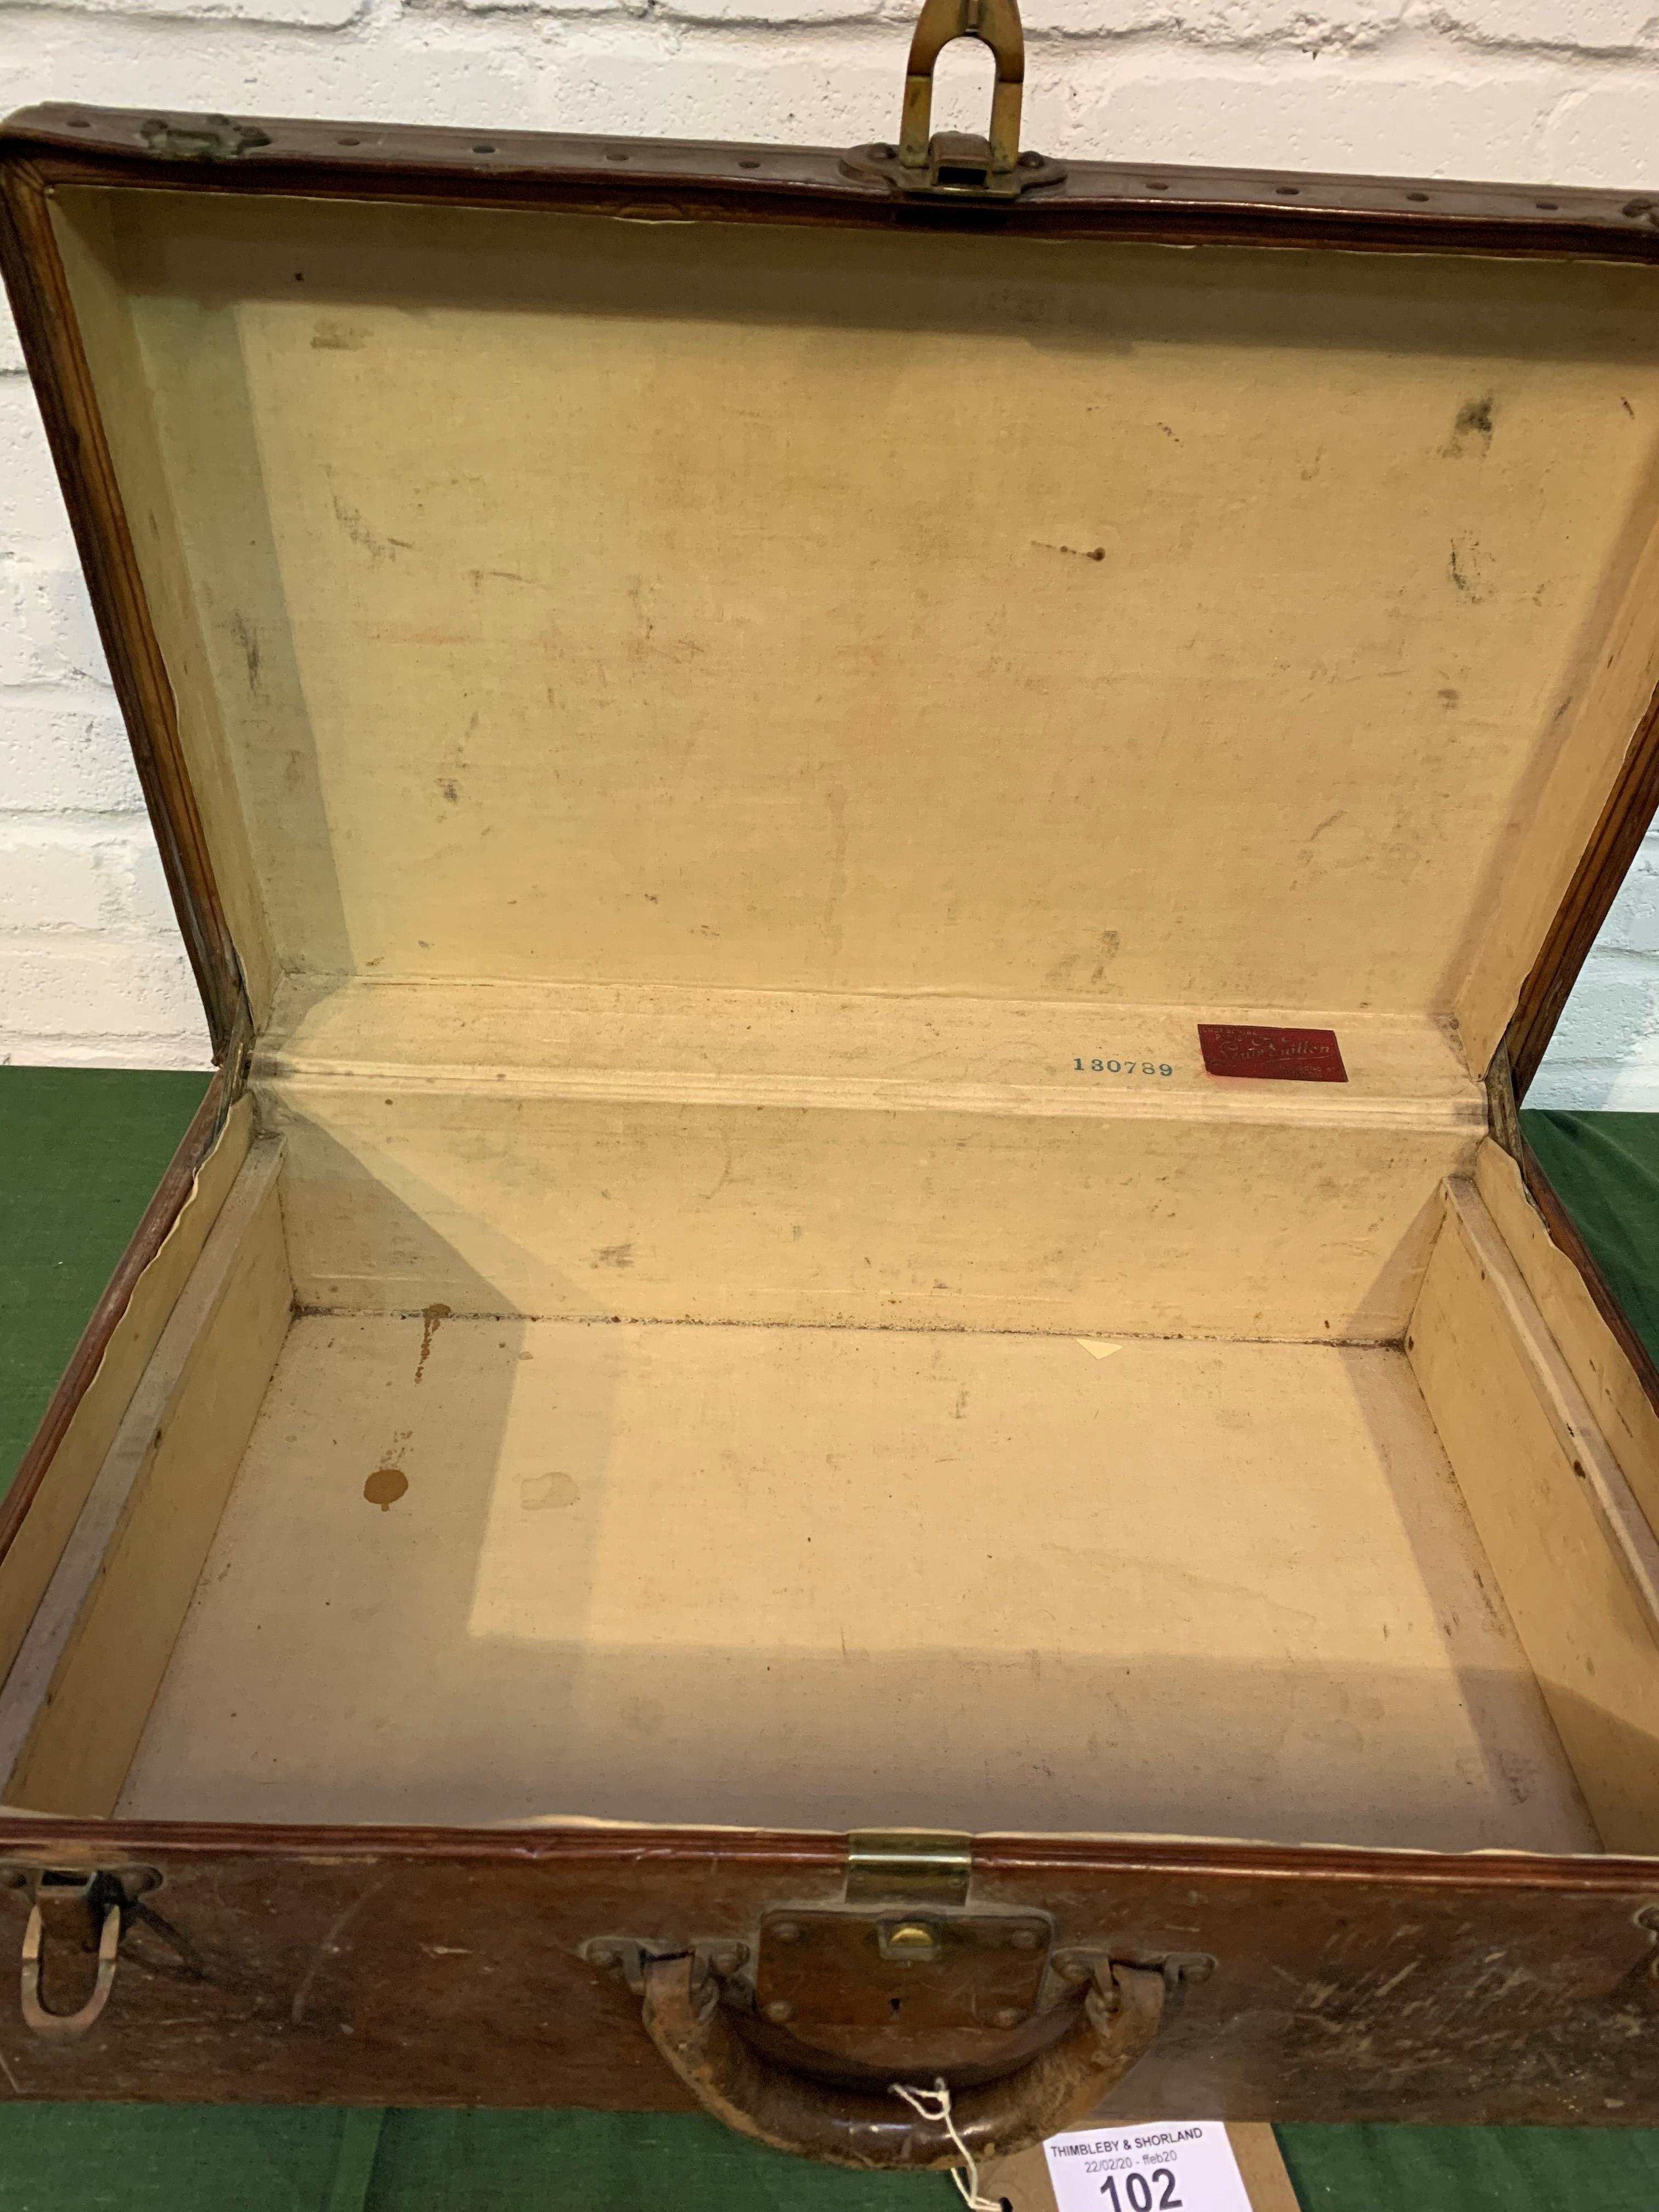 Louis Vuitton suitcase in original condition. Serial number 130789. 61 x 39 x 22cms. Estimate £20